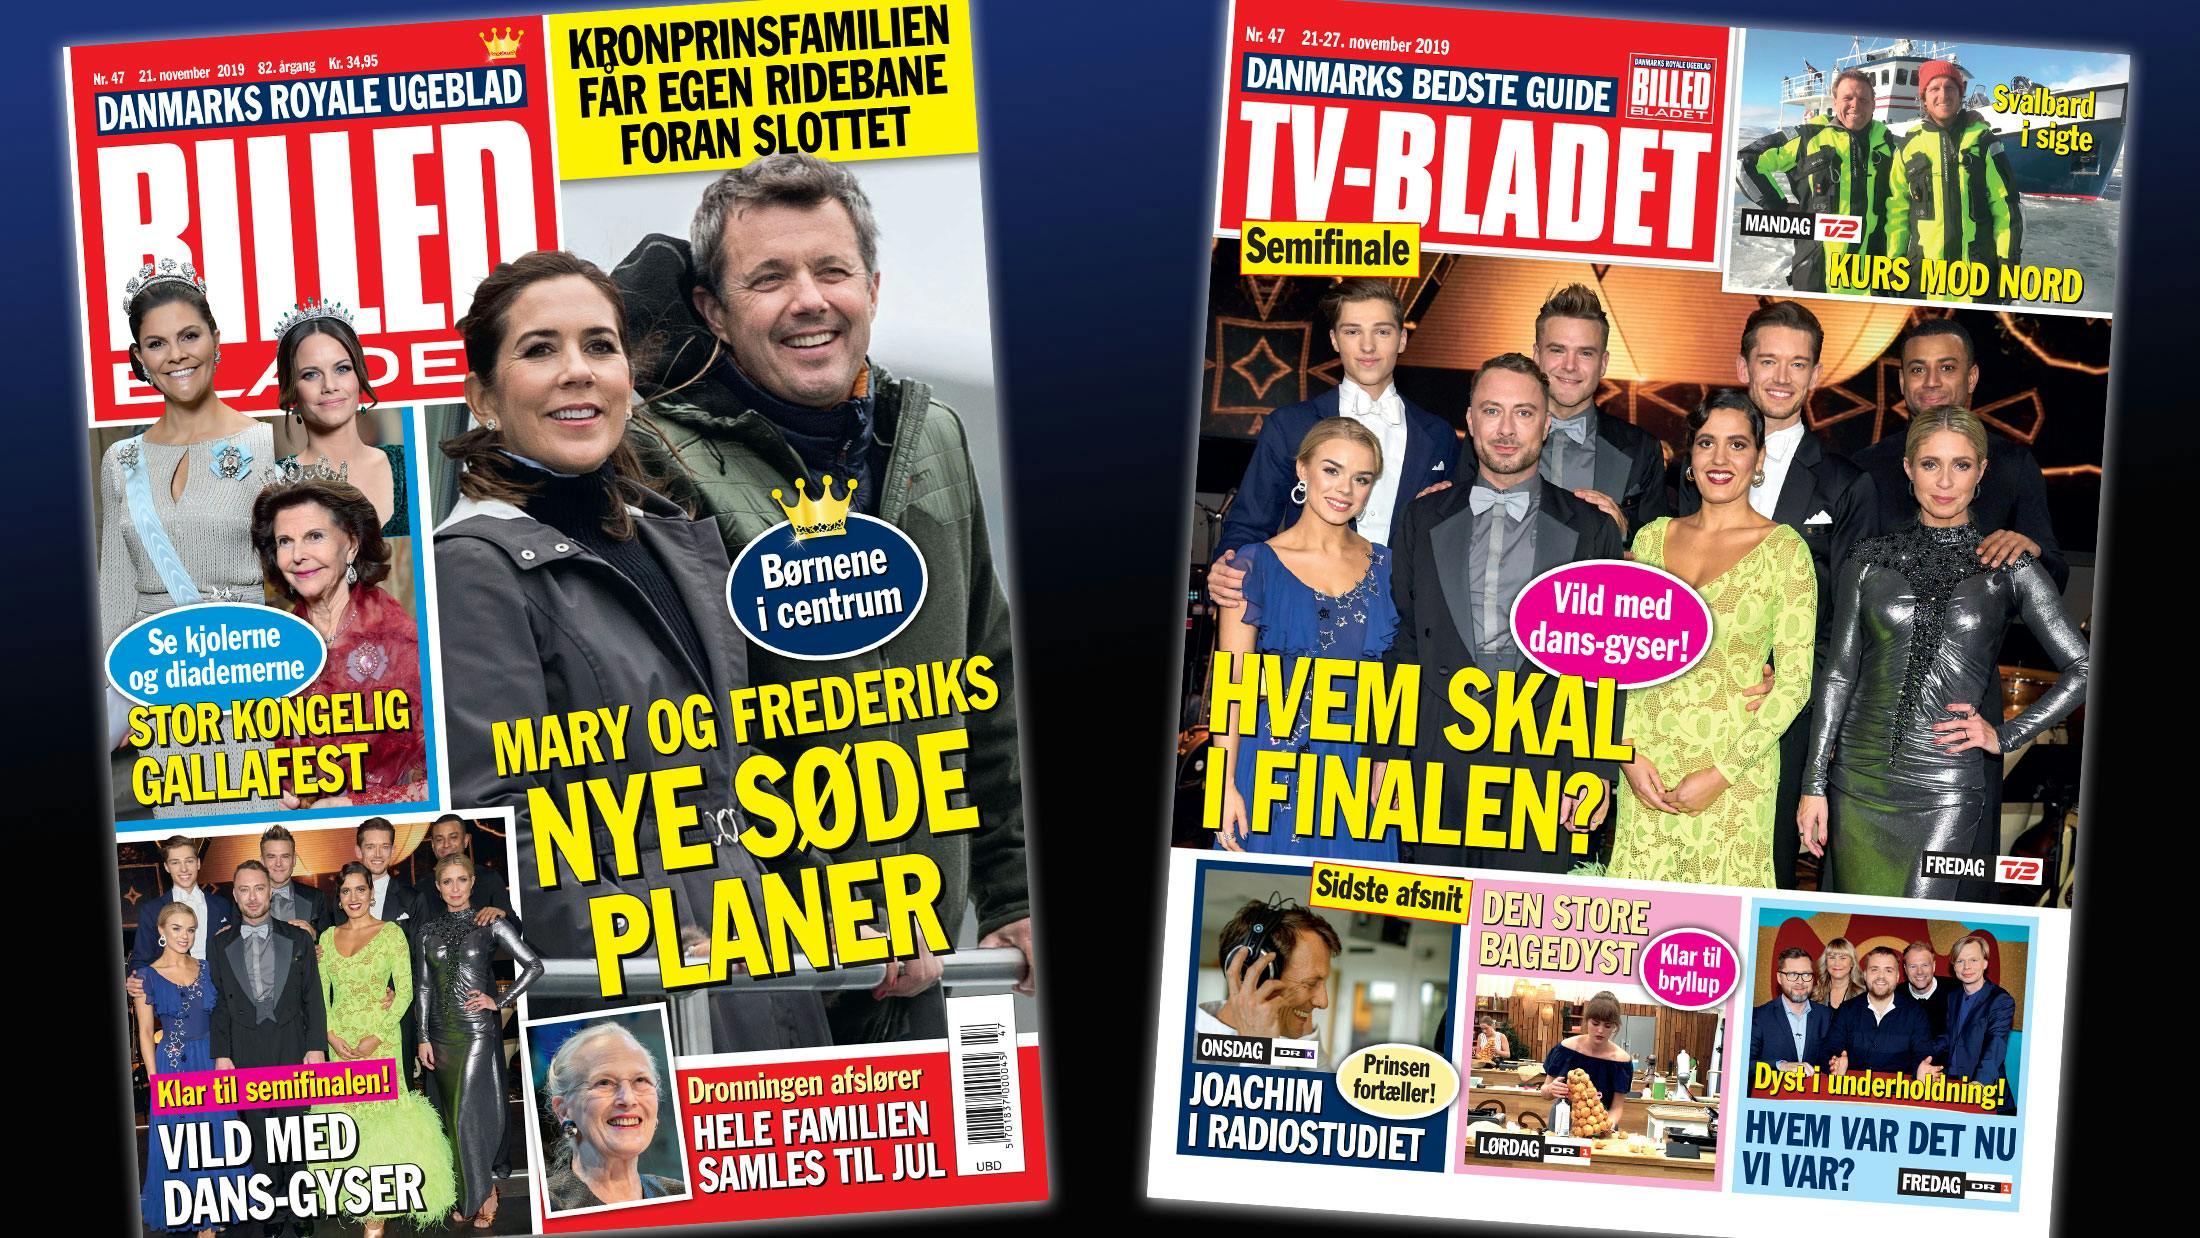 https://imgix.billedbladet.dk/webgrafik_bb47-forsider.jpg